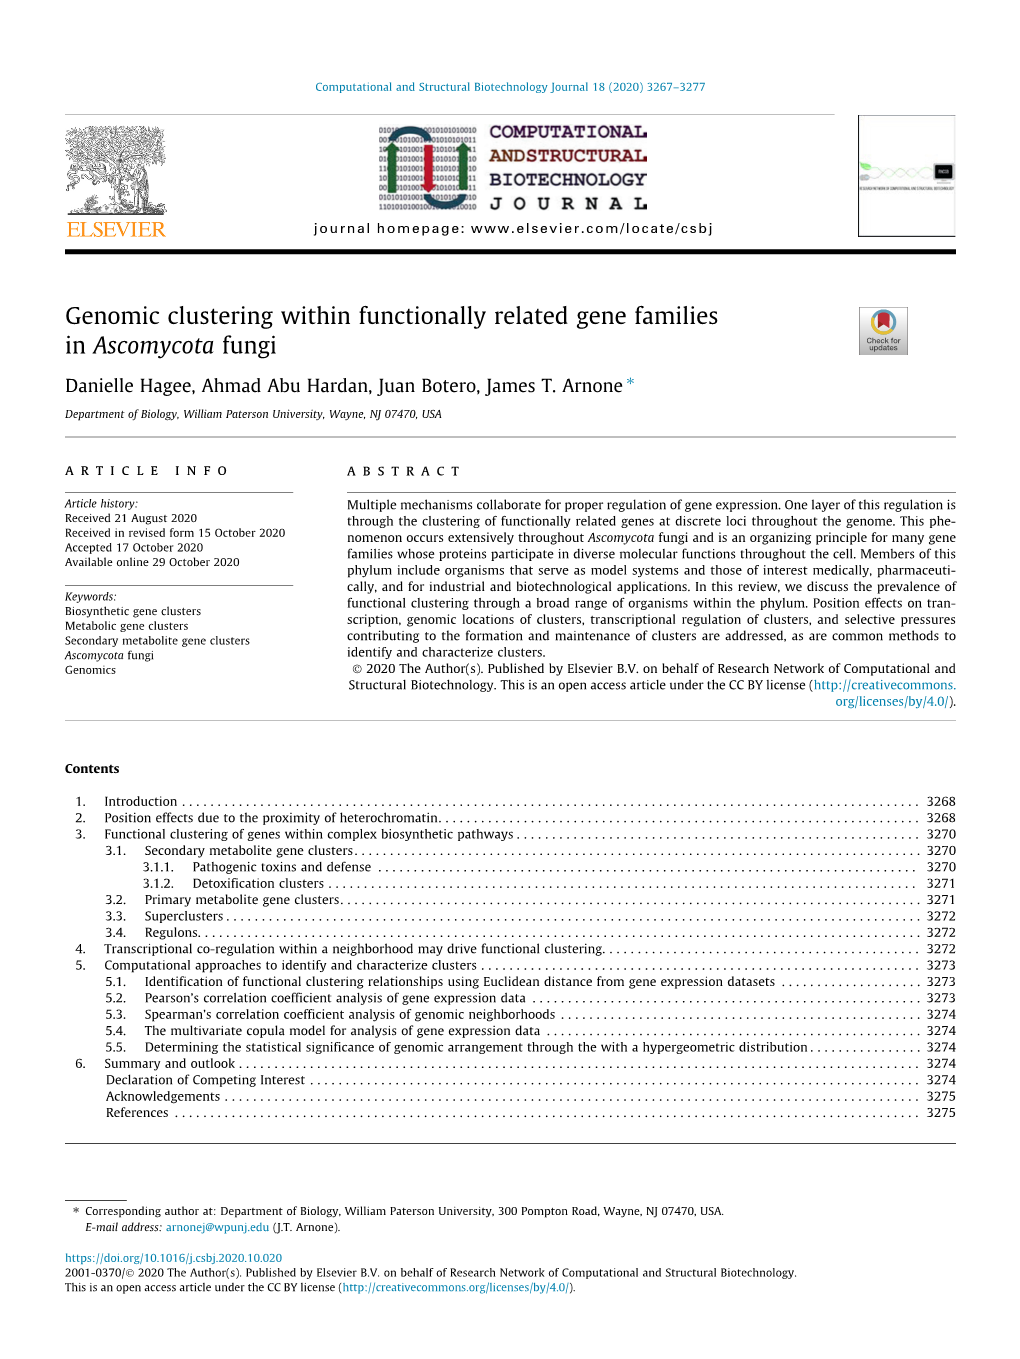 Genomic Clustering Within Functionally Related Gene Families in Ascomycota Fungi ⇑ Danielle Hagee, Ahmad Abu Hardan, Juan Botero, James T